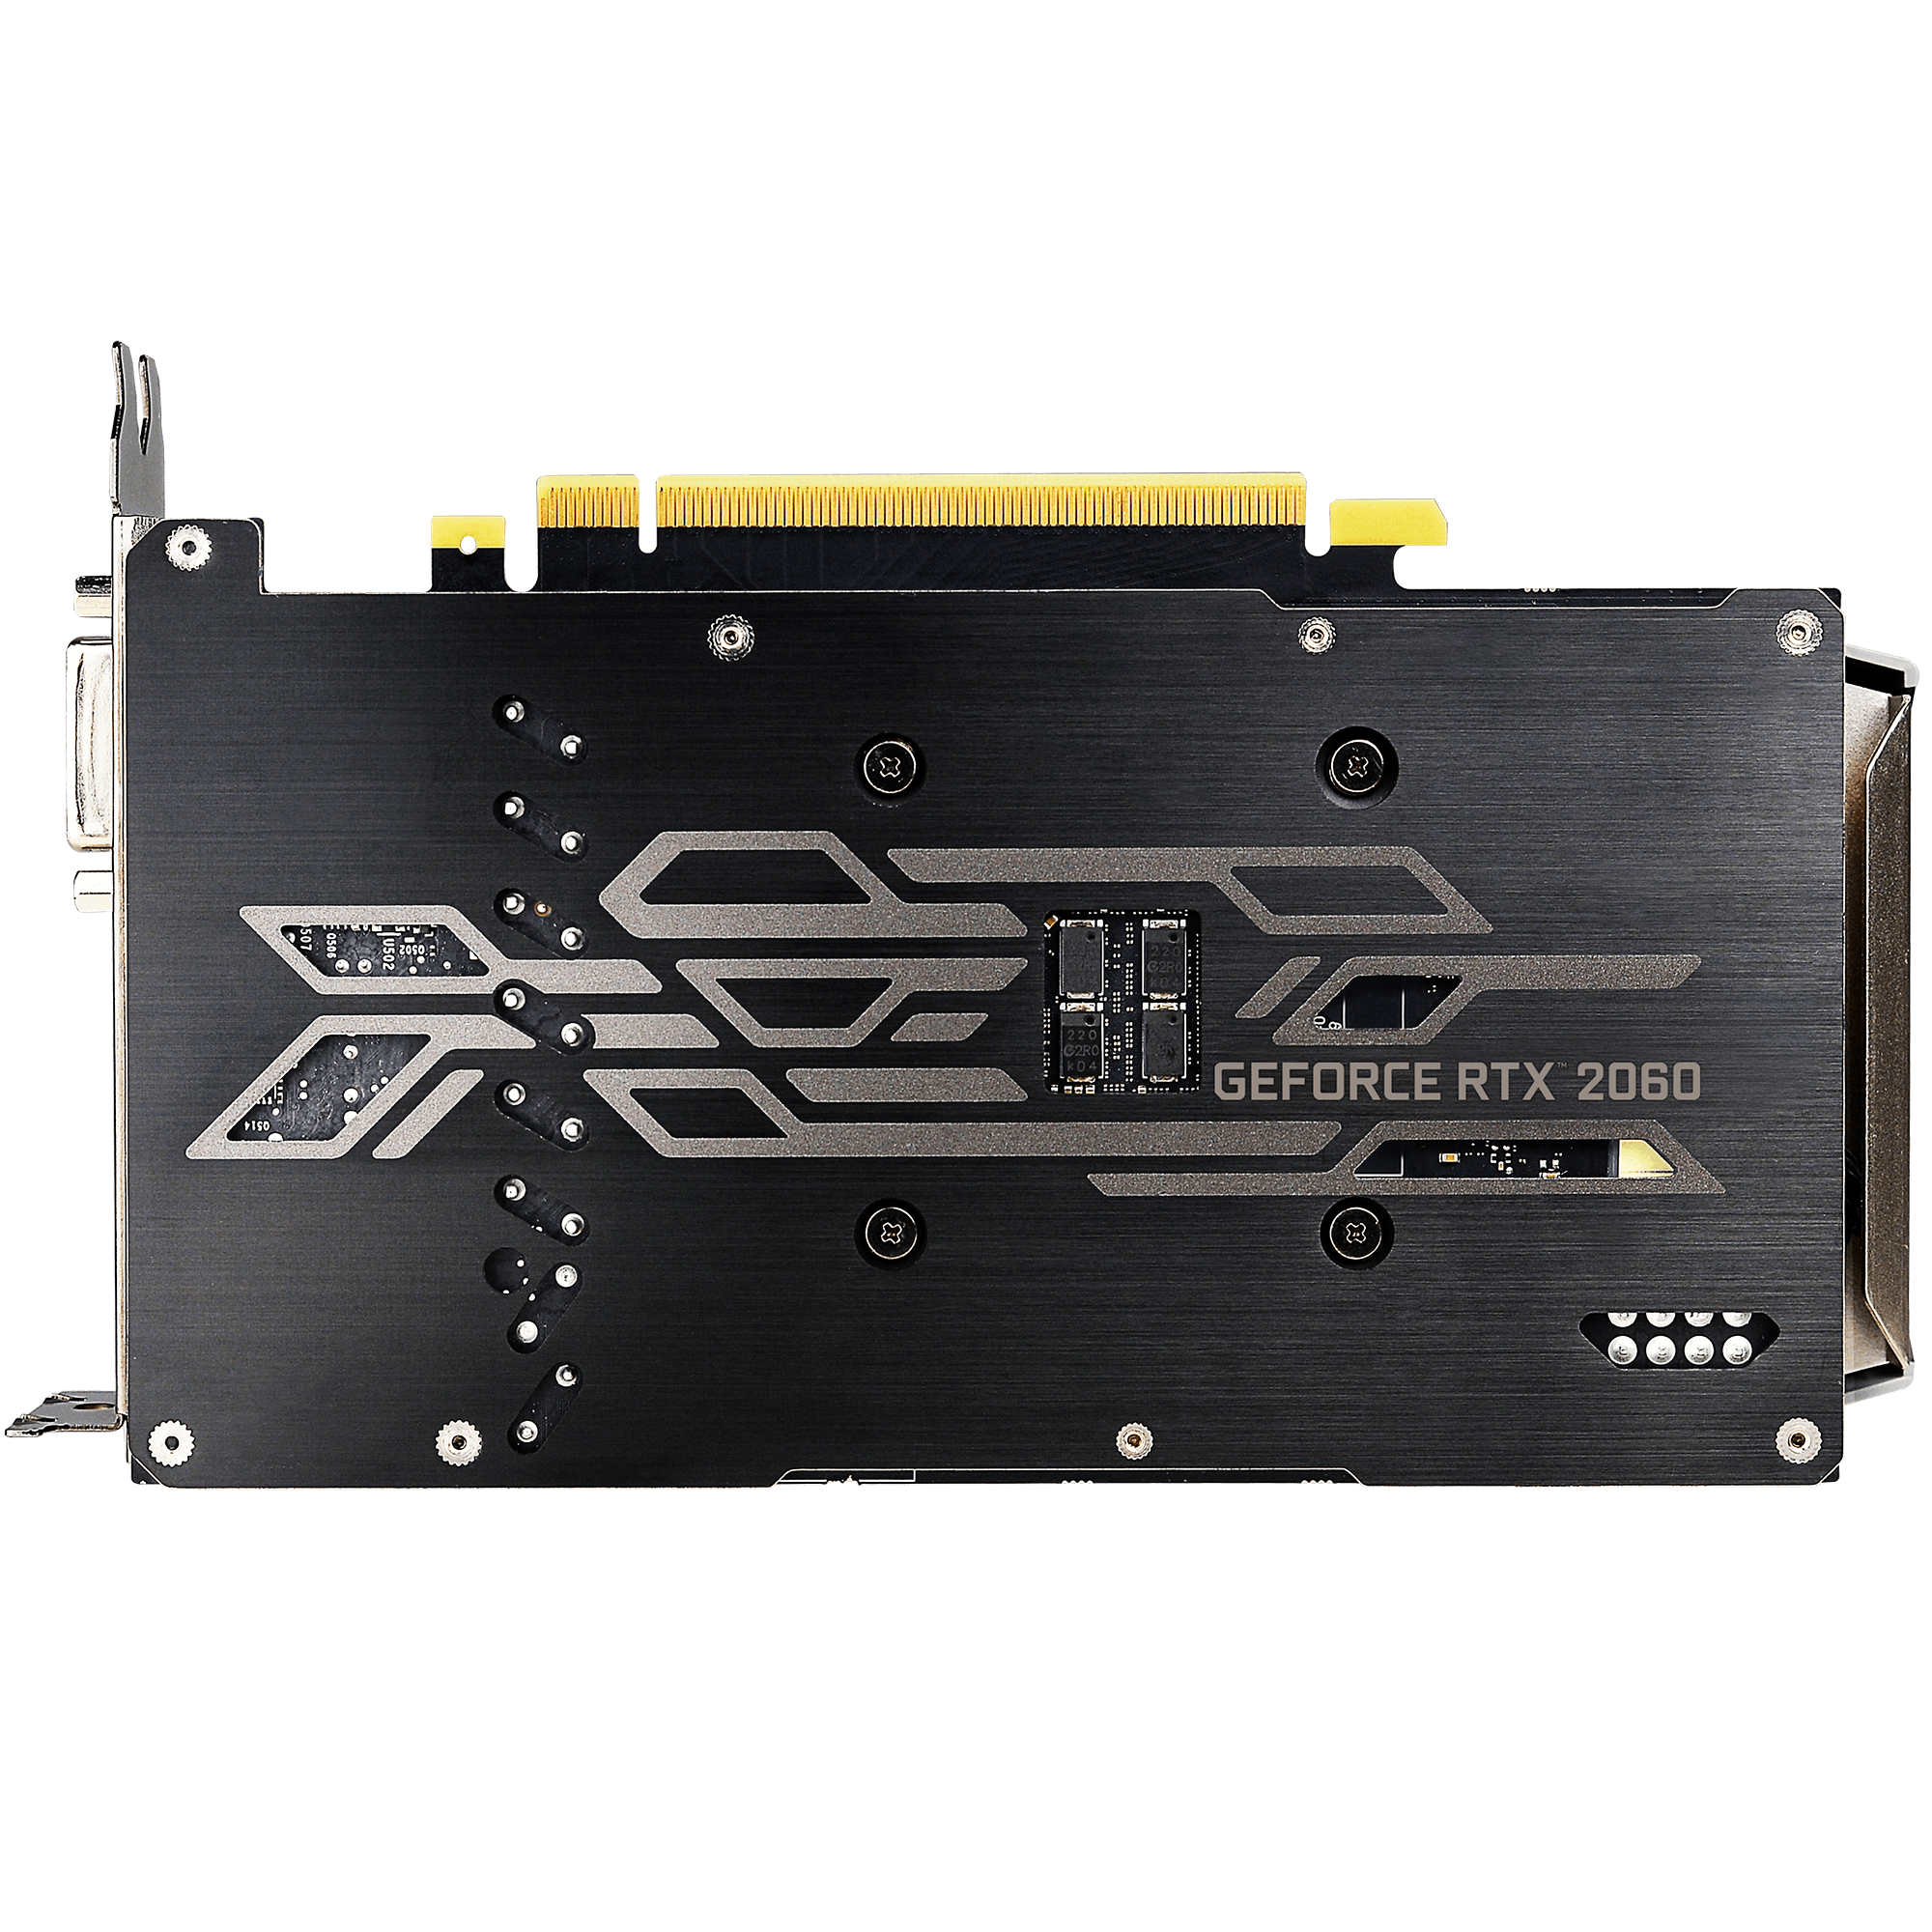 EVGA GeForce RTX 2060 KO ULTRA GAMING, 06G-P4-2068-KR, 6GB GDDR6, Dual Fans, Metal Backplate - Image 6